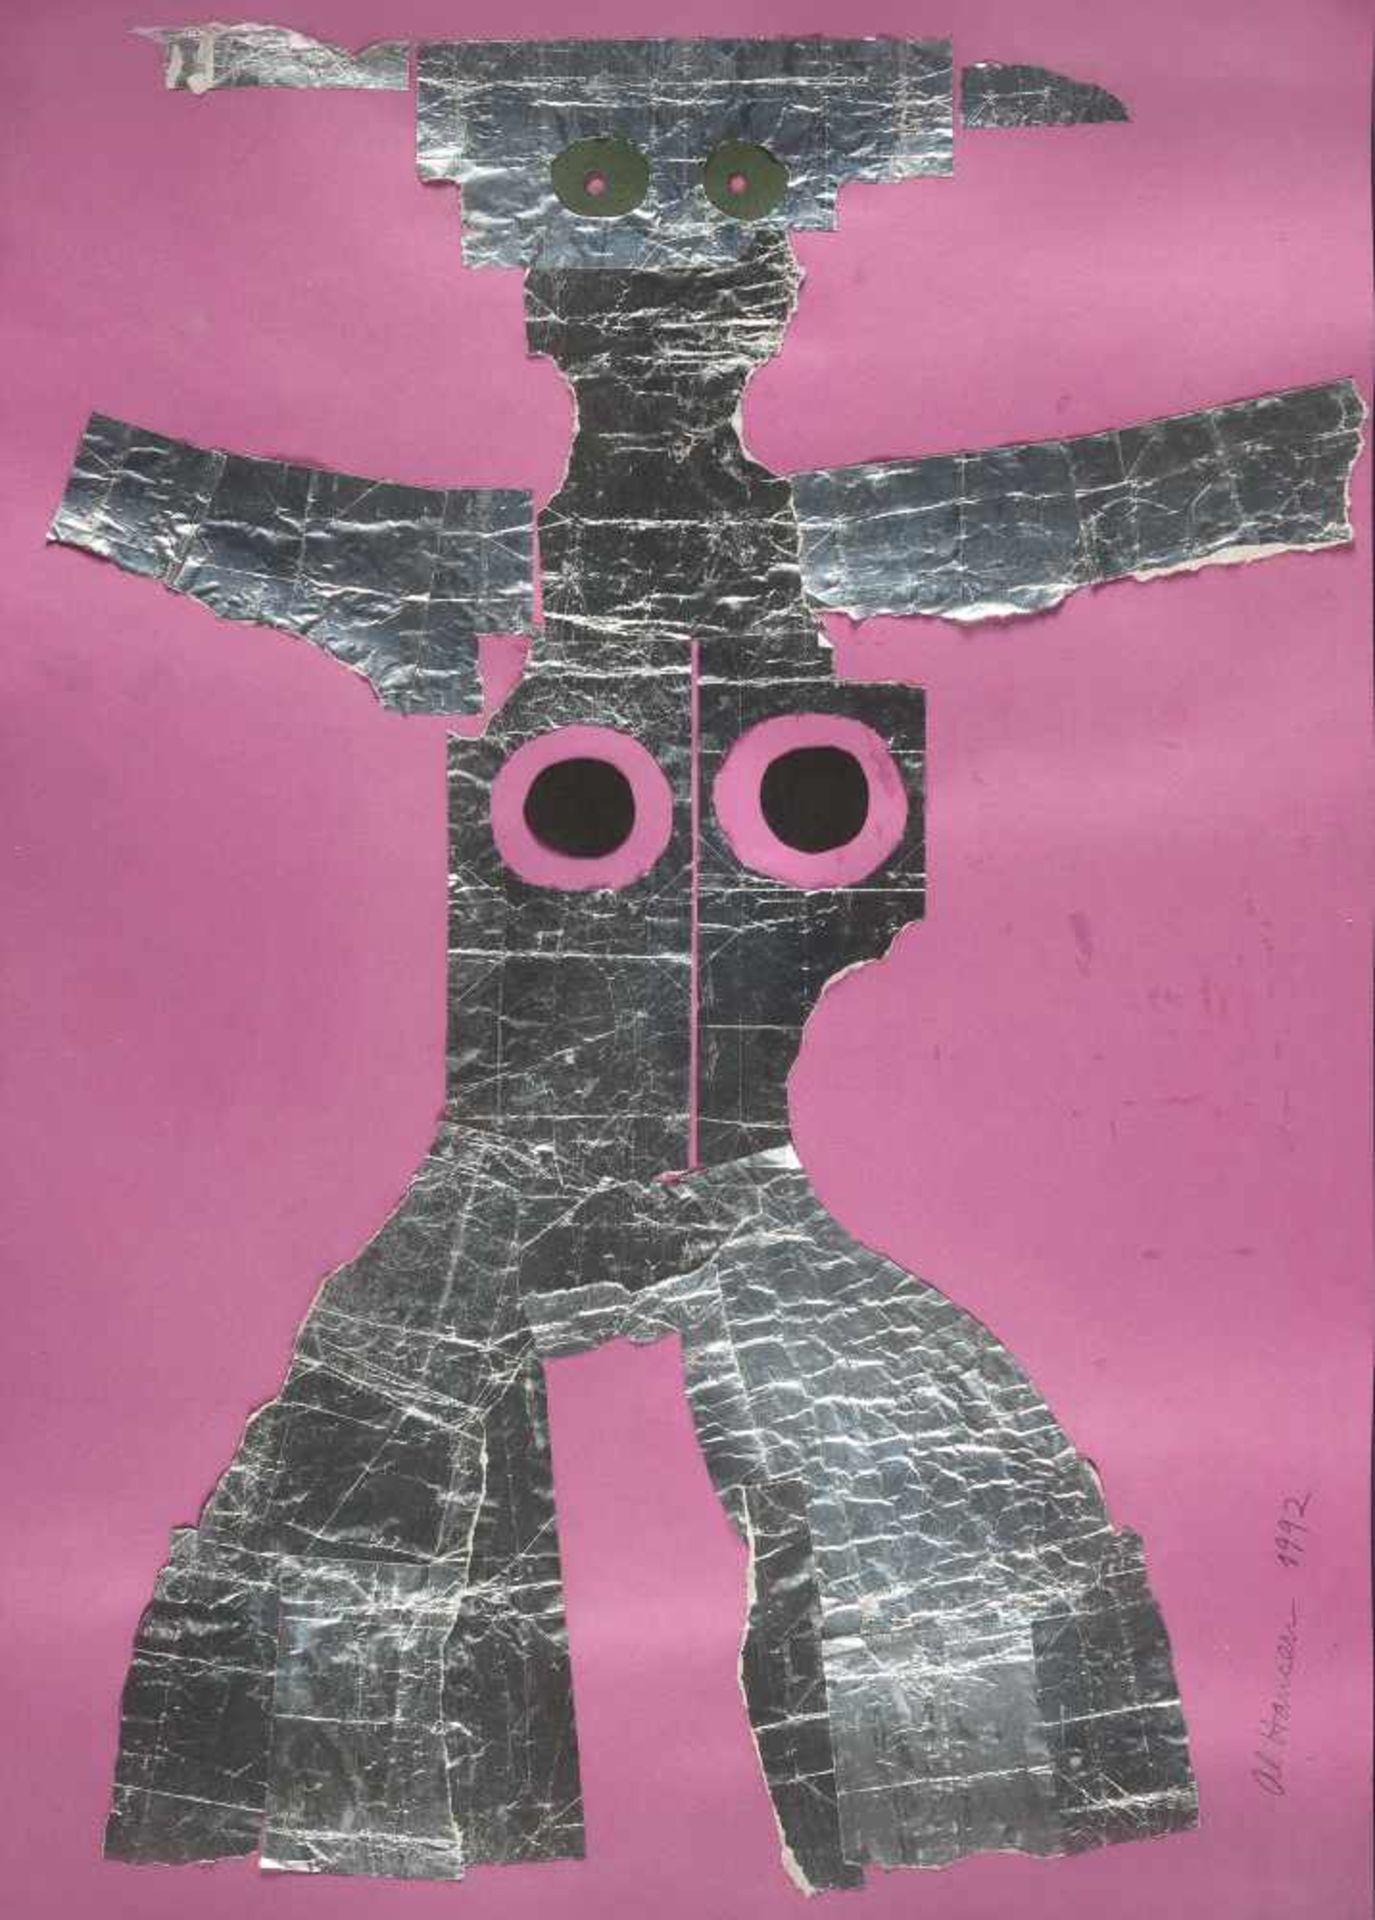 AL HANSEN - Ohne Titel (Venus) Collage mit Aluminiumpapier auf leichtem, pinkfarbenem Karton.